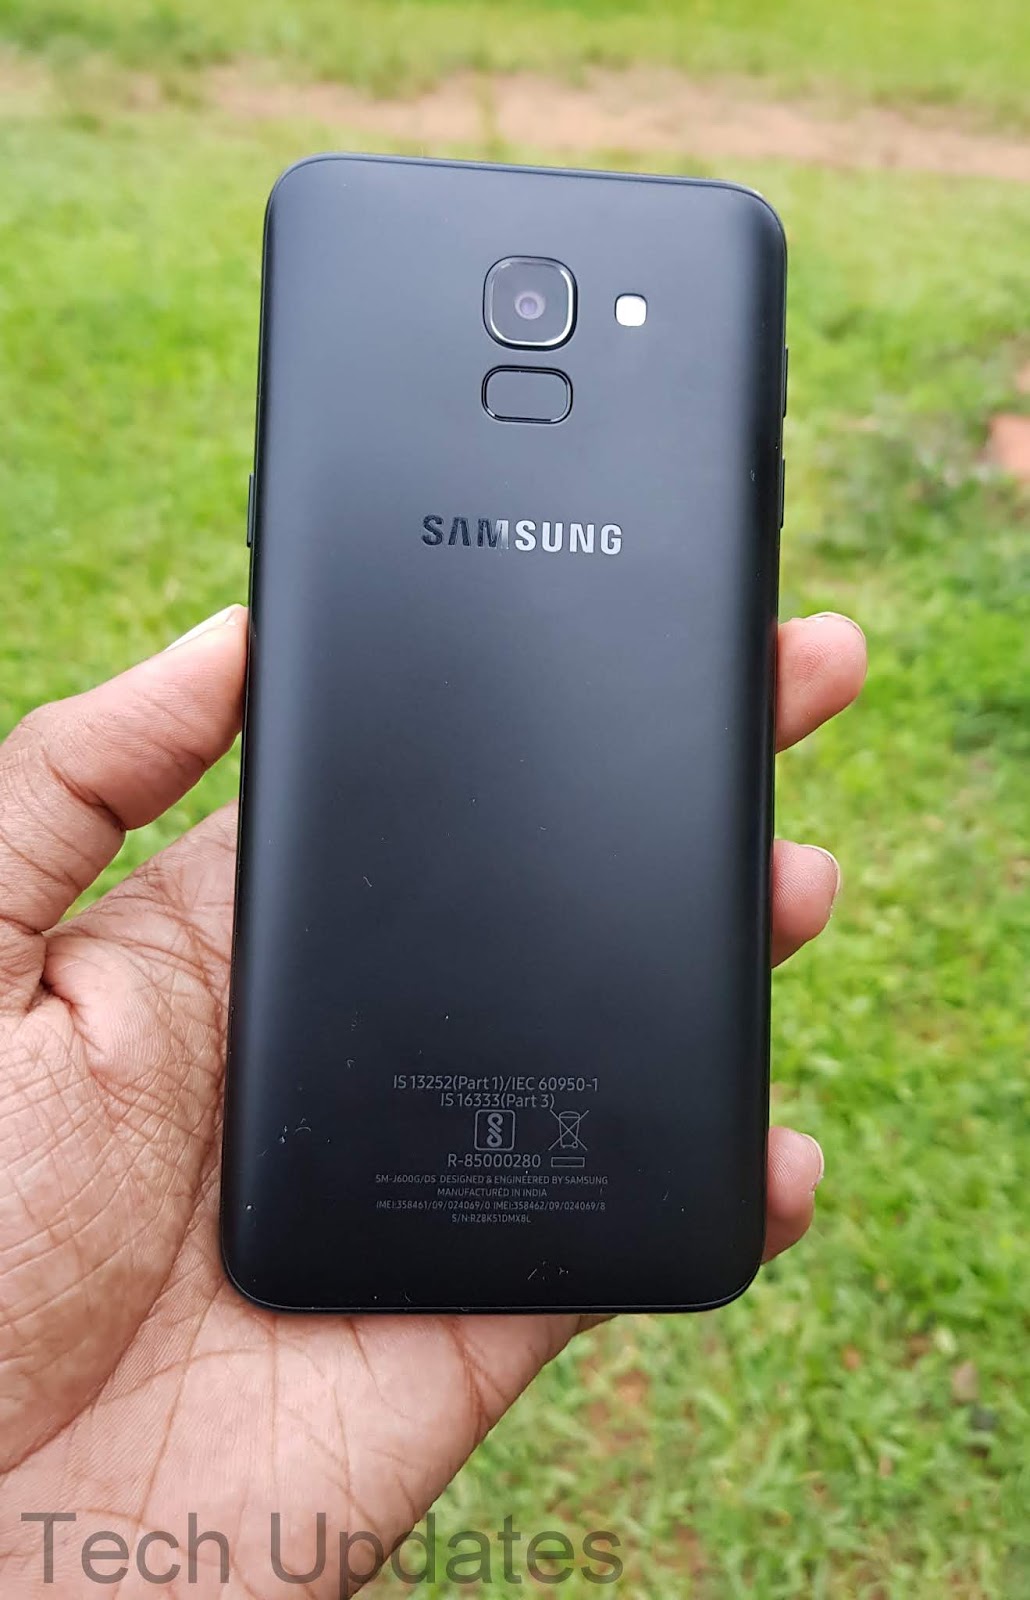 6 Reasons Not To Buy Samsung Galaxy J6 Tech Updates